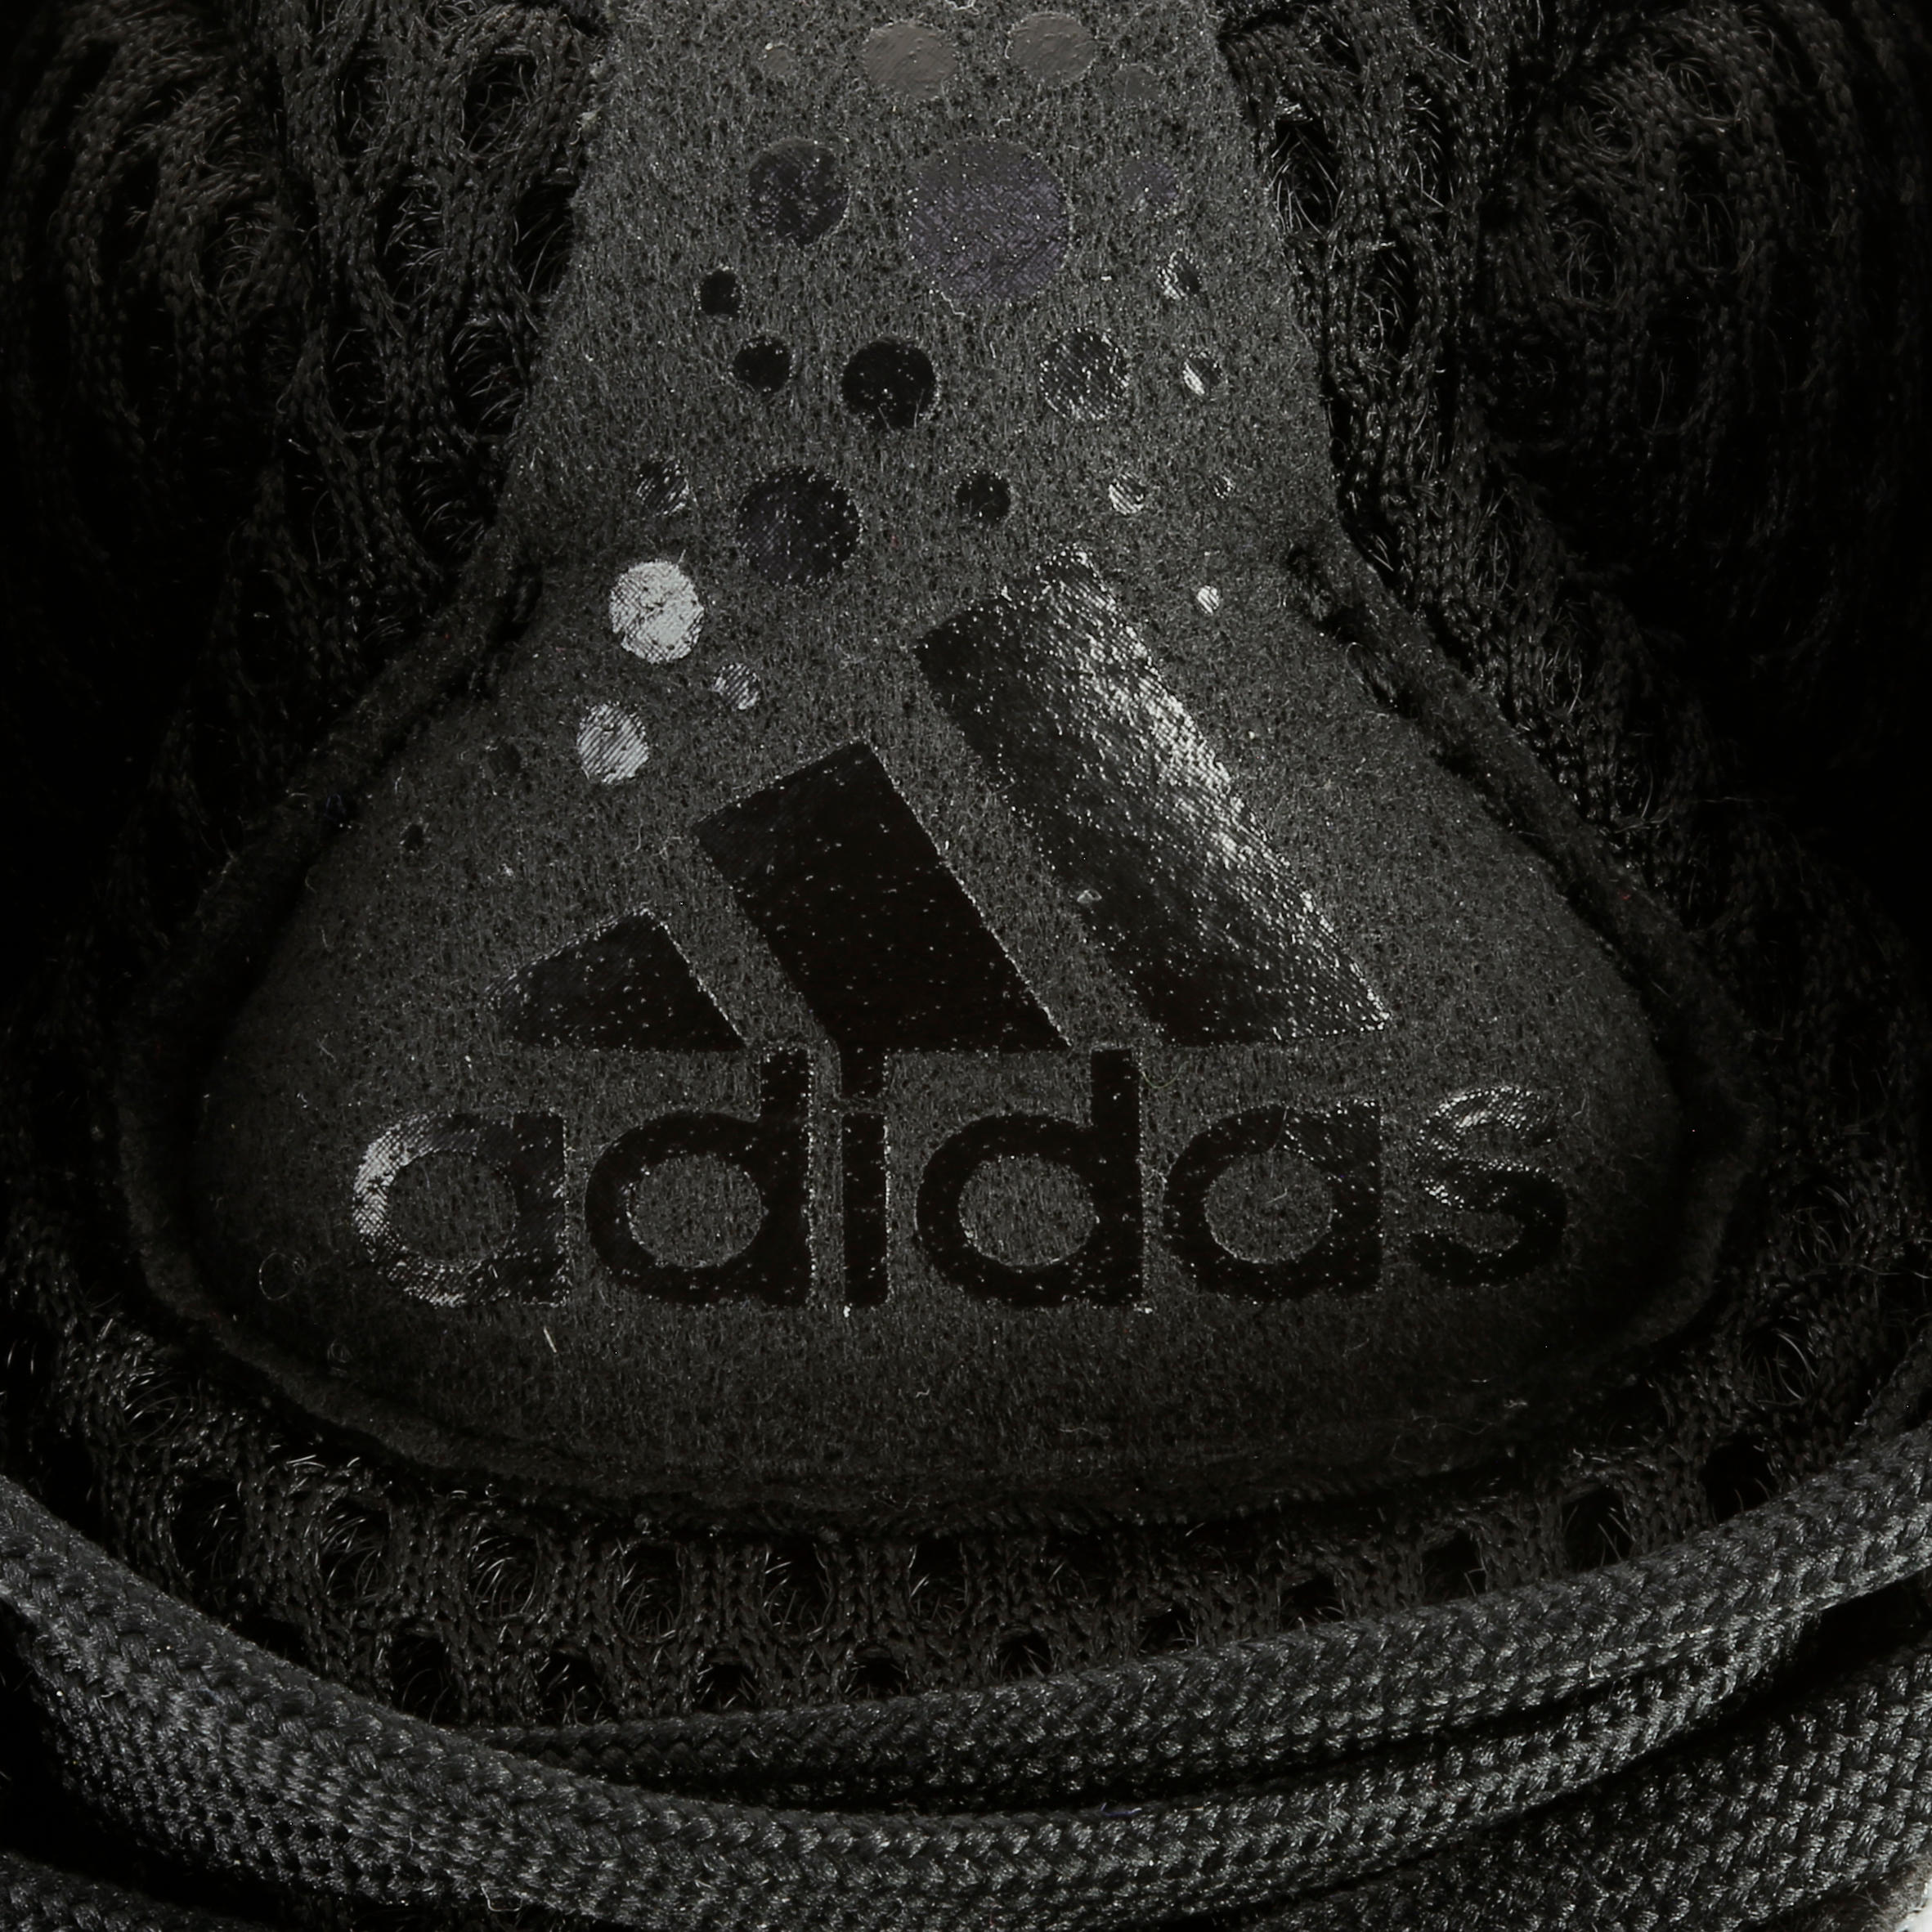 chaussures basketball adidas crazy heat blanche noire adidas